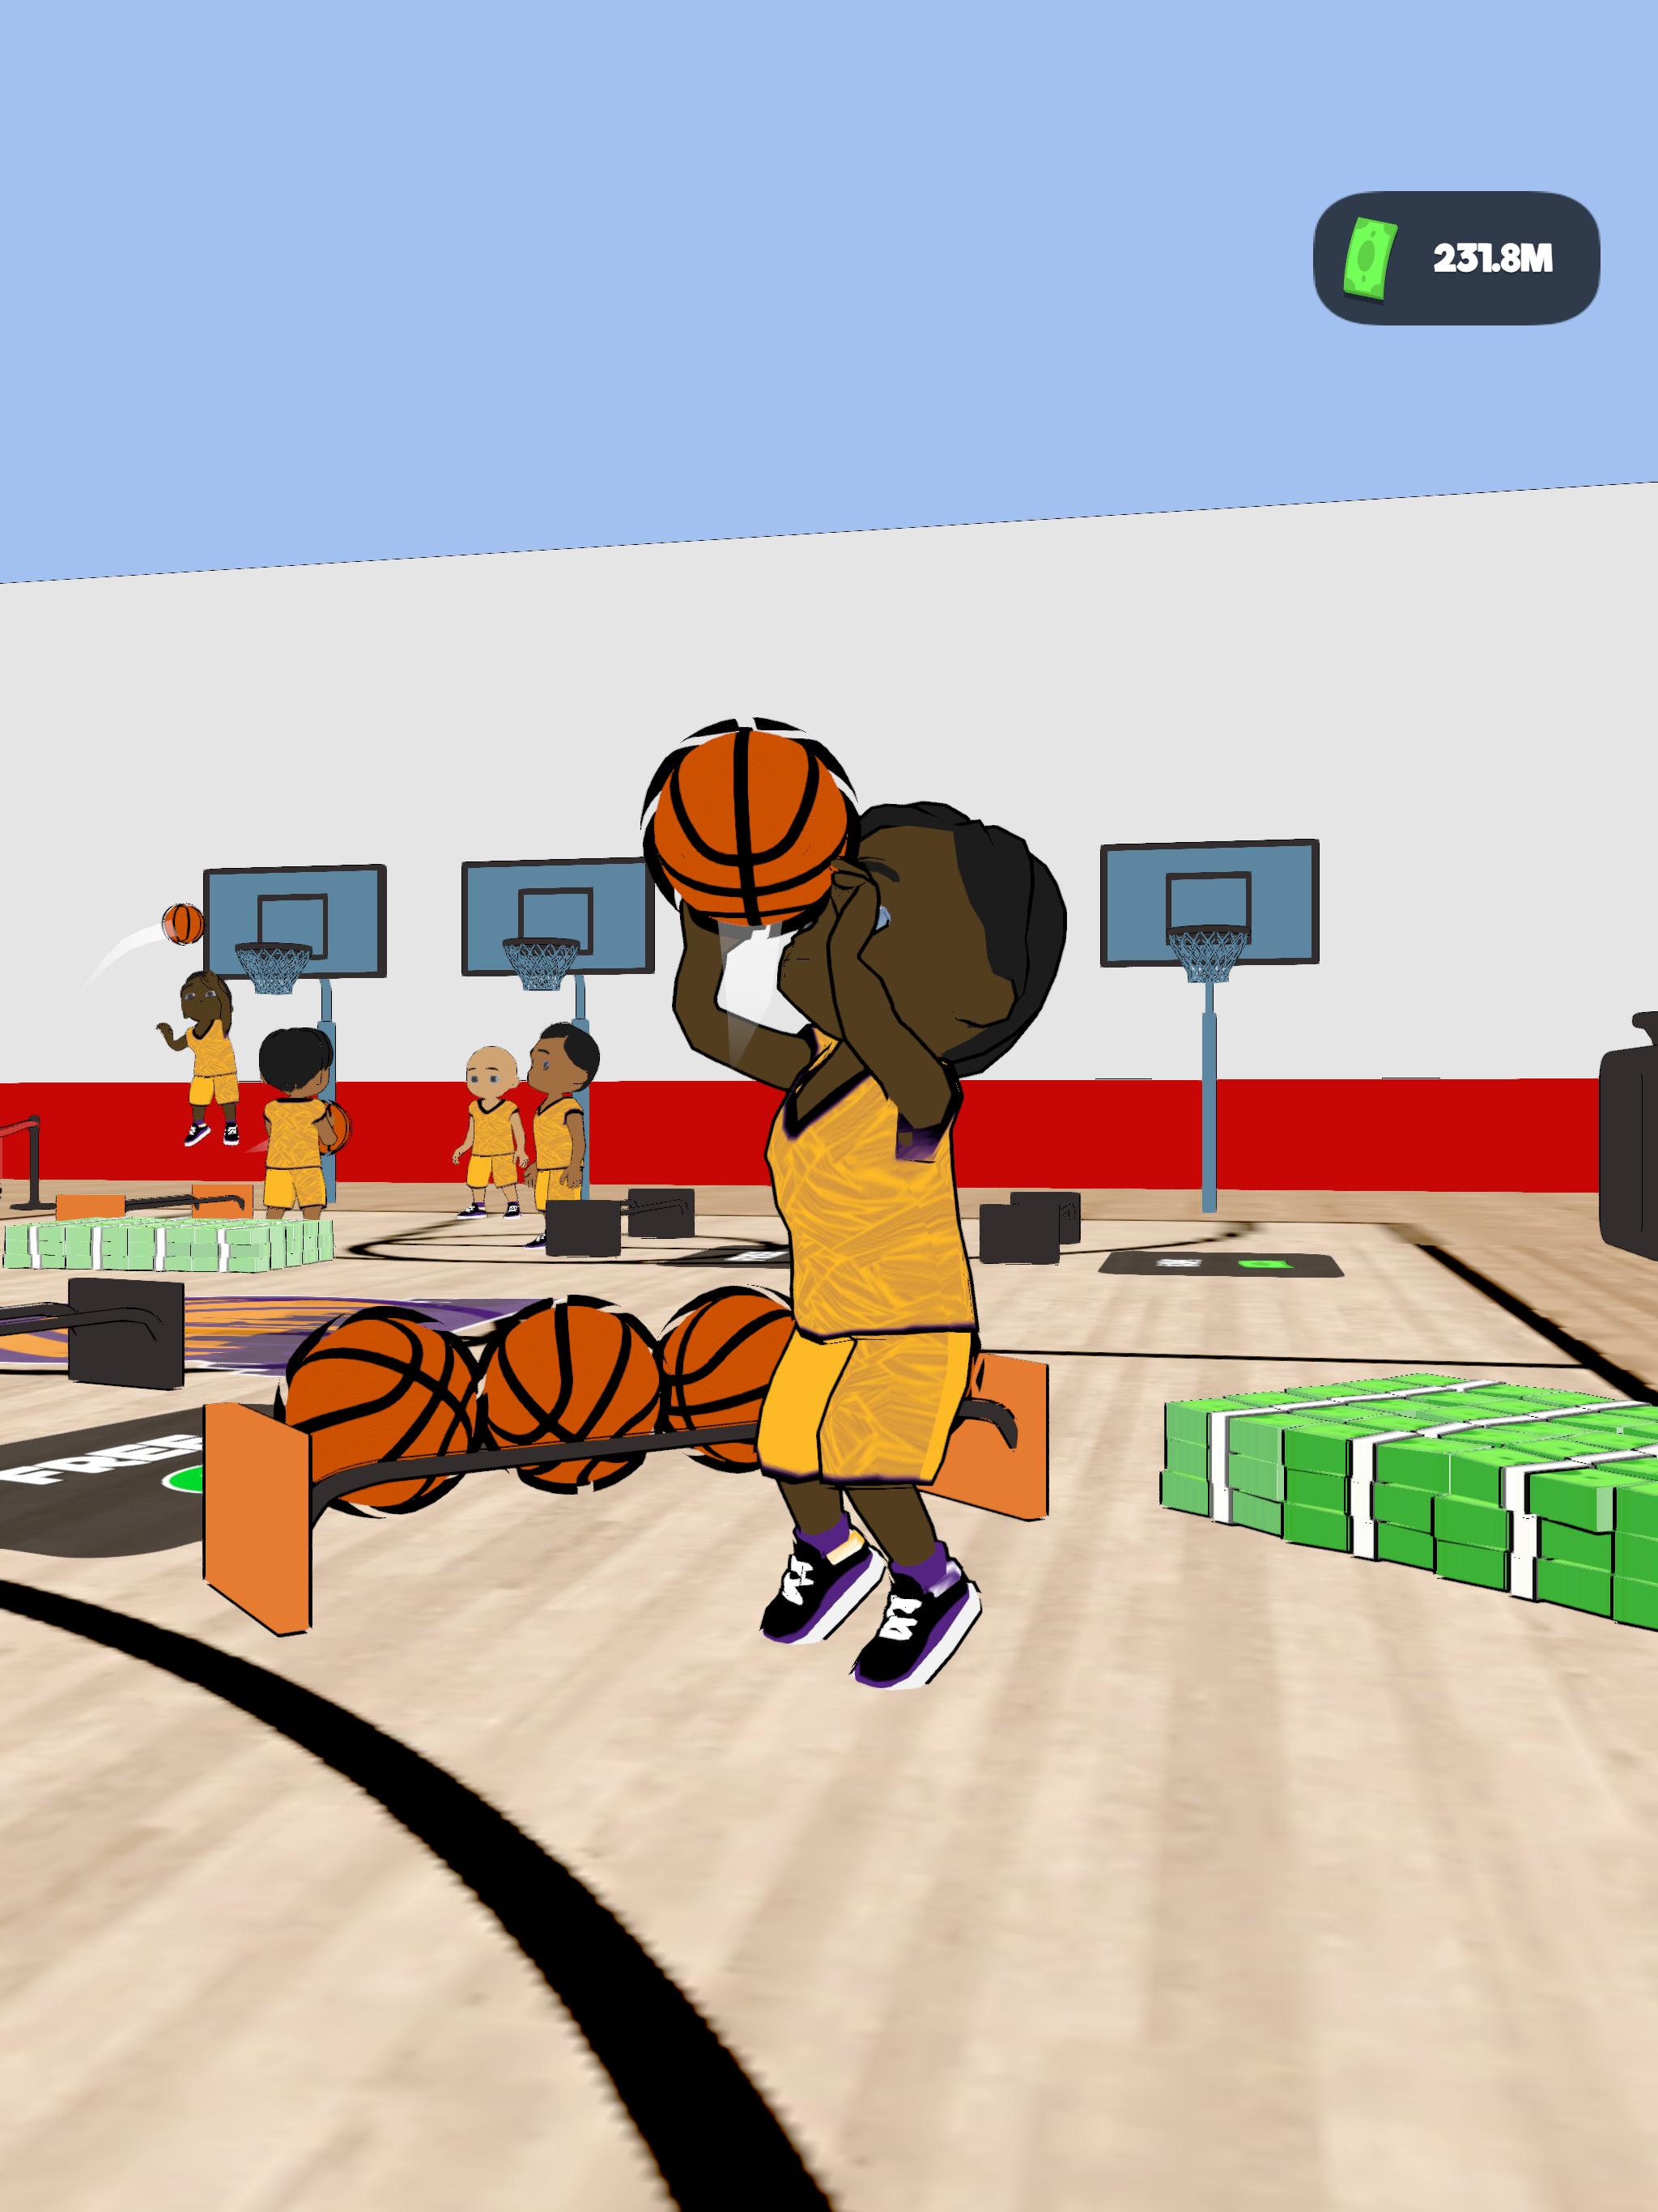 Bt game app. Баскетбол менеджер на андроид.